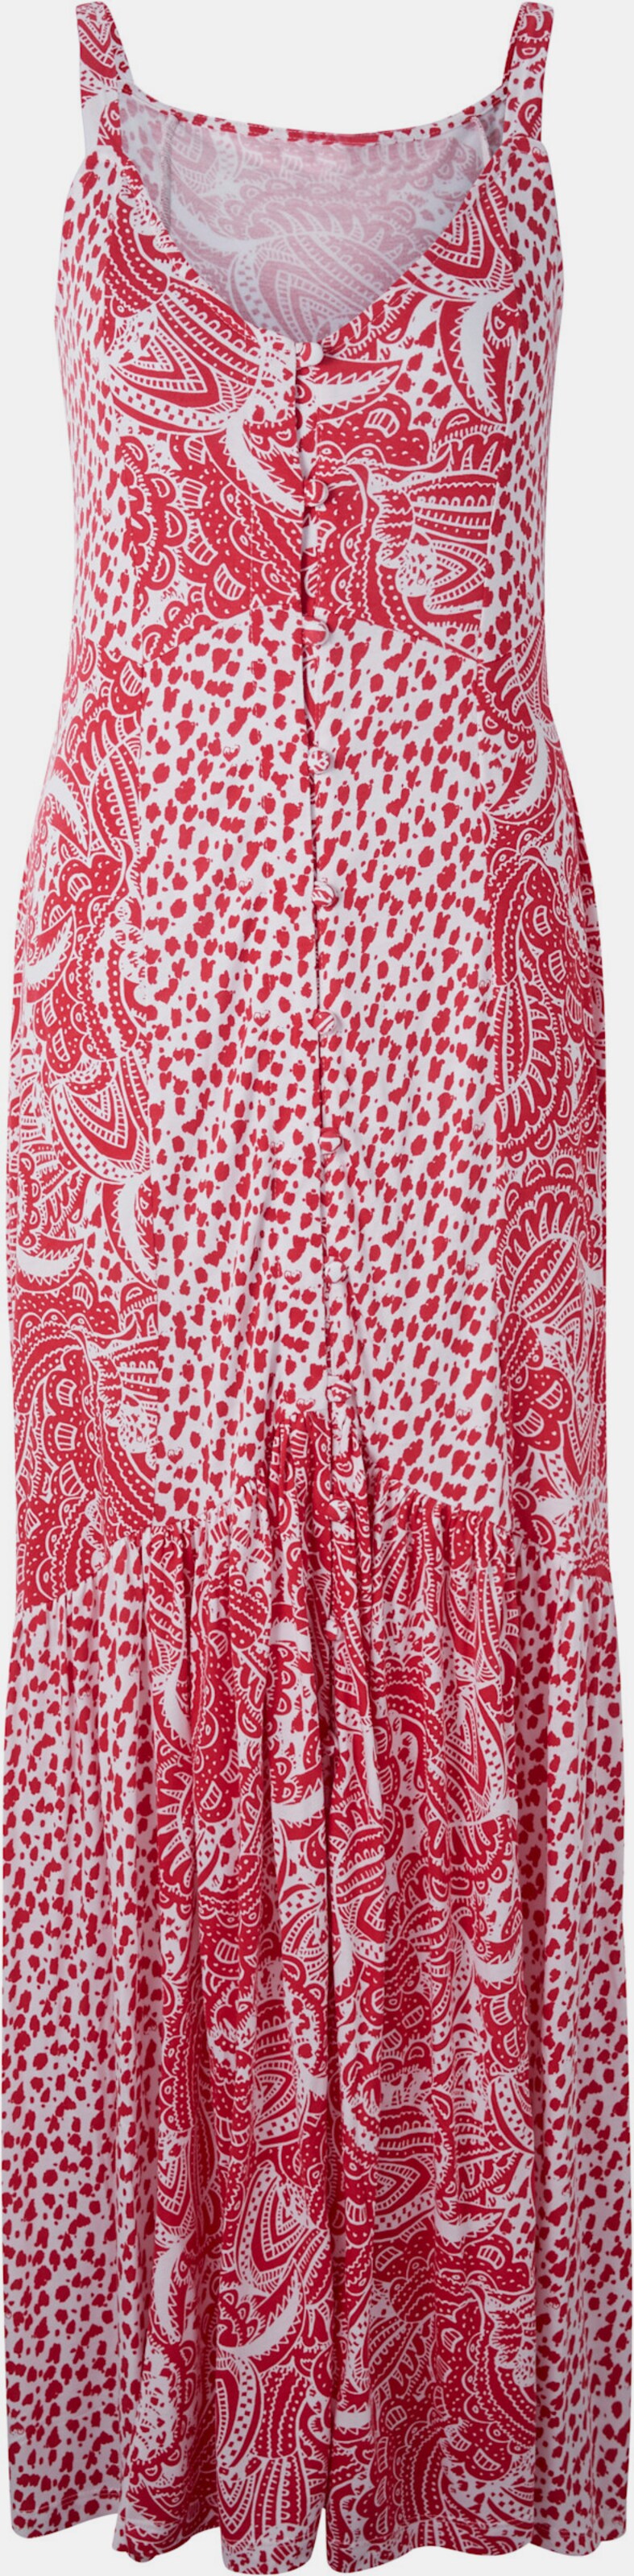 heine Robe imprimée - rouge-blanc